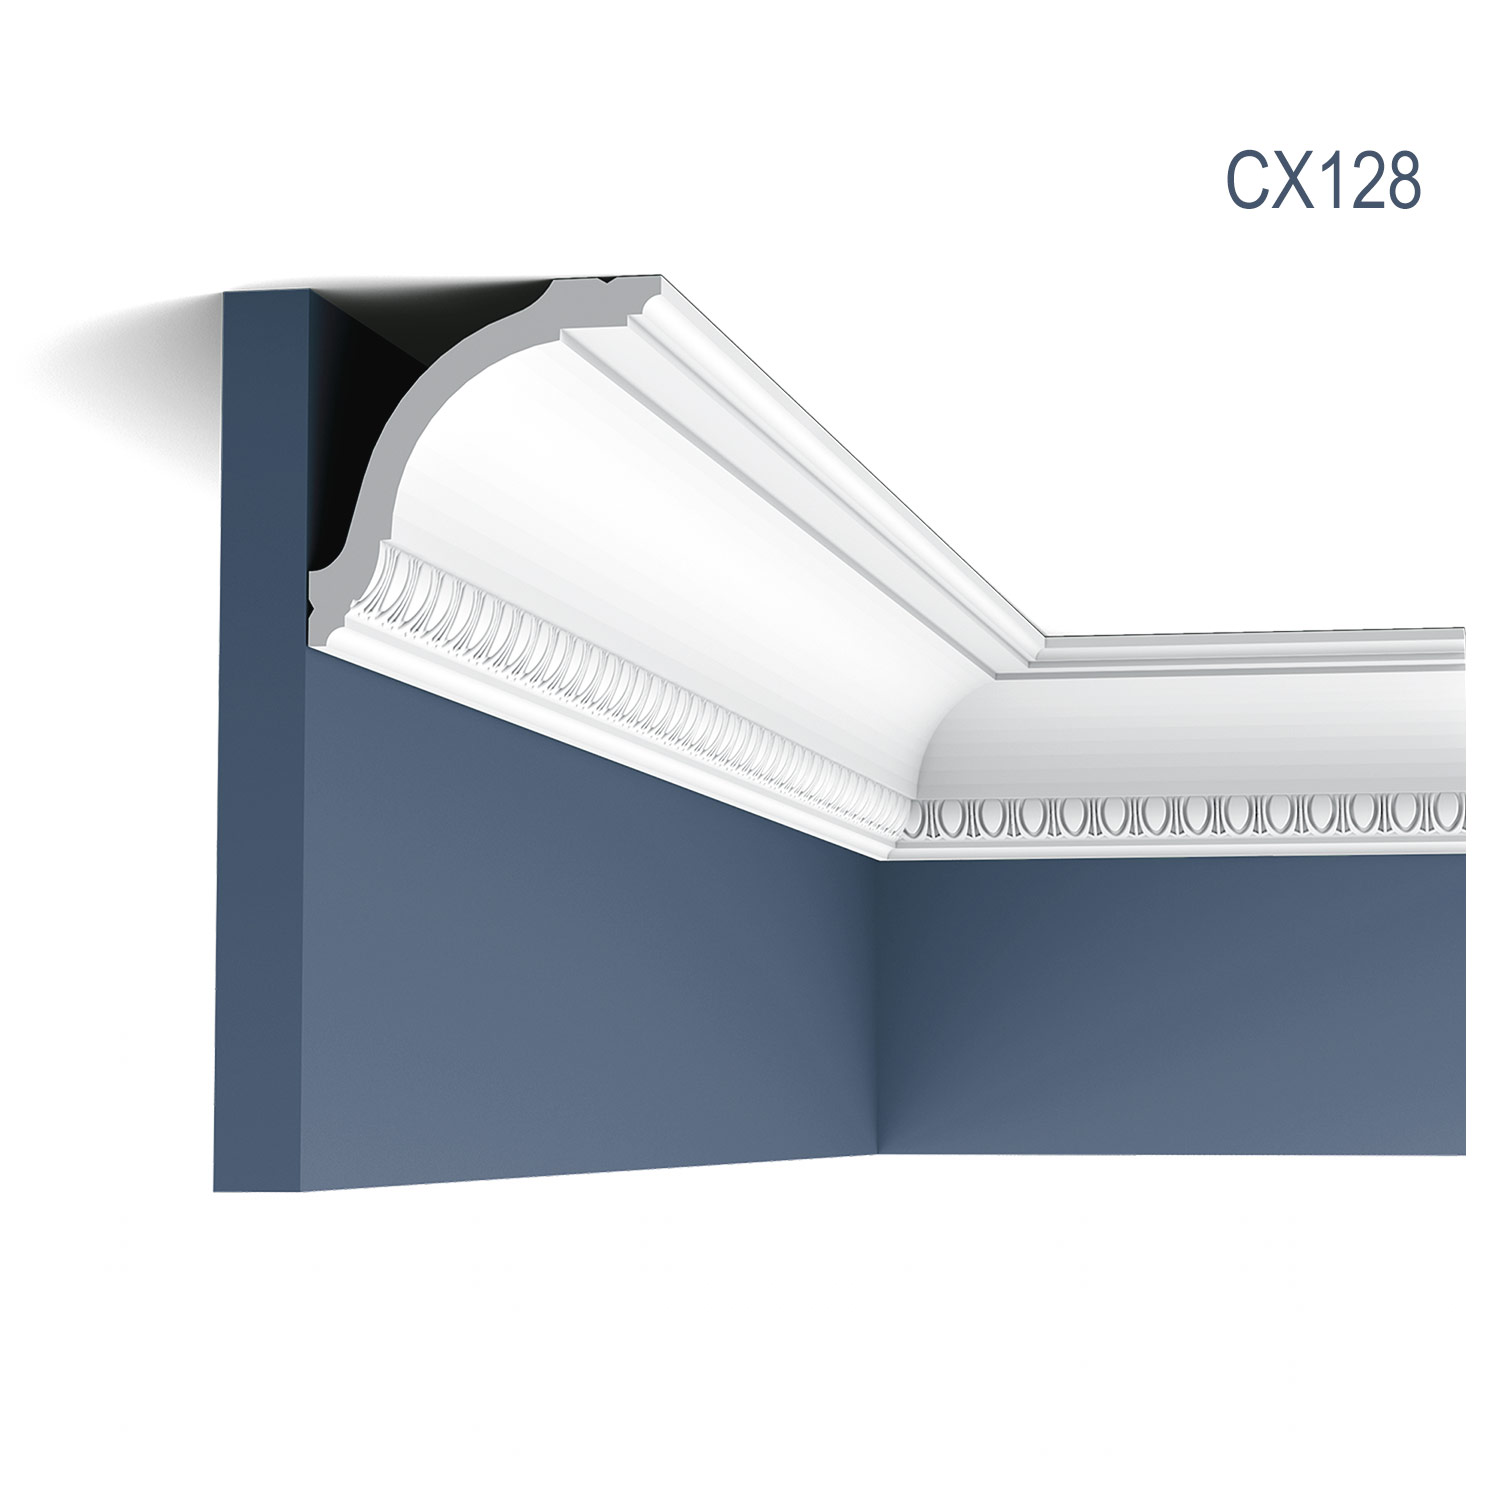 Cornisa Axxent CX128, Dimensiuni: 200 X 9.4 X 9.4 cm, Orac Decor Orac Decor